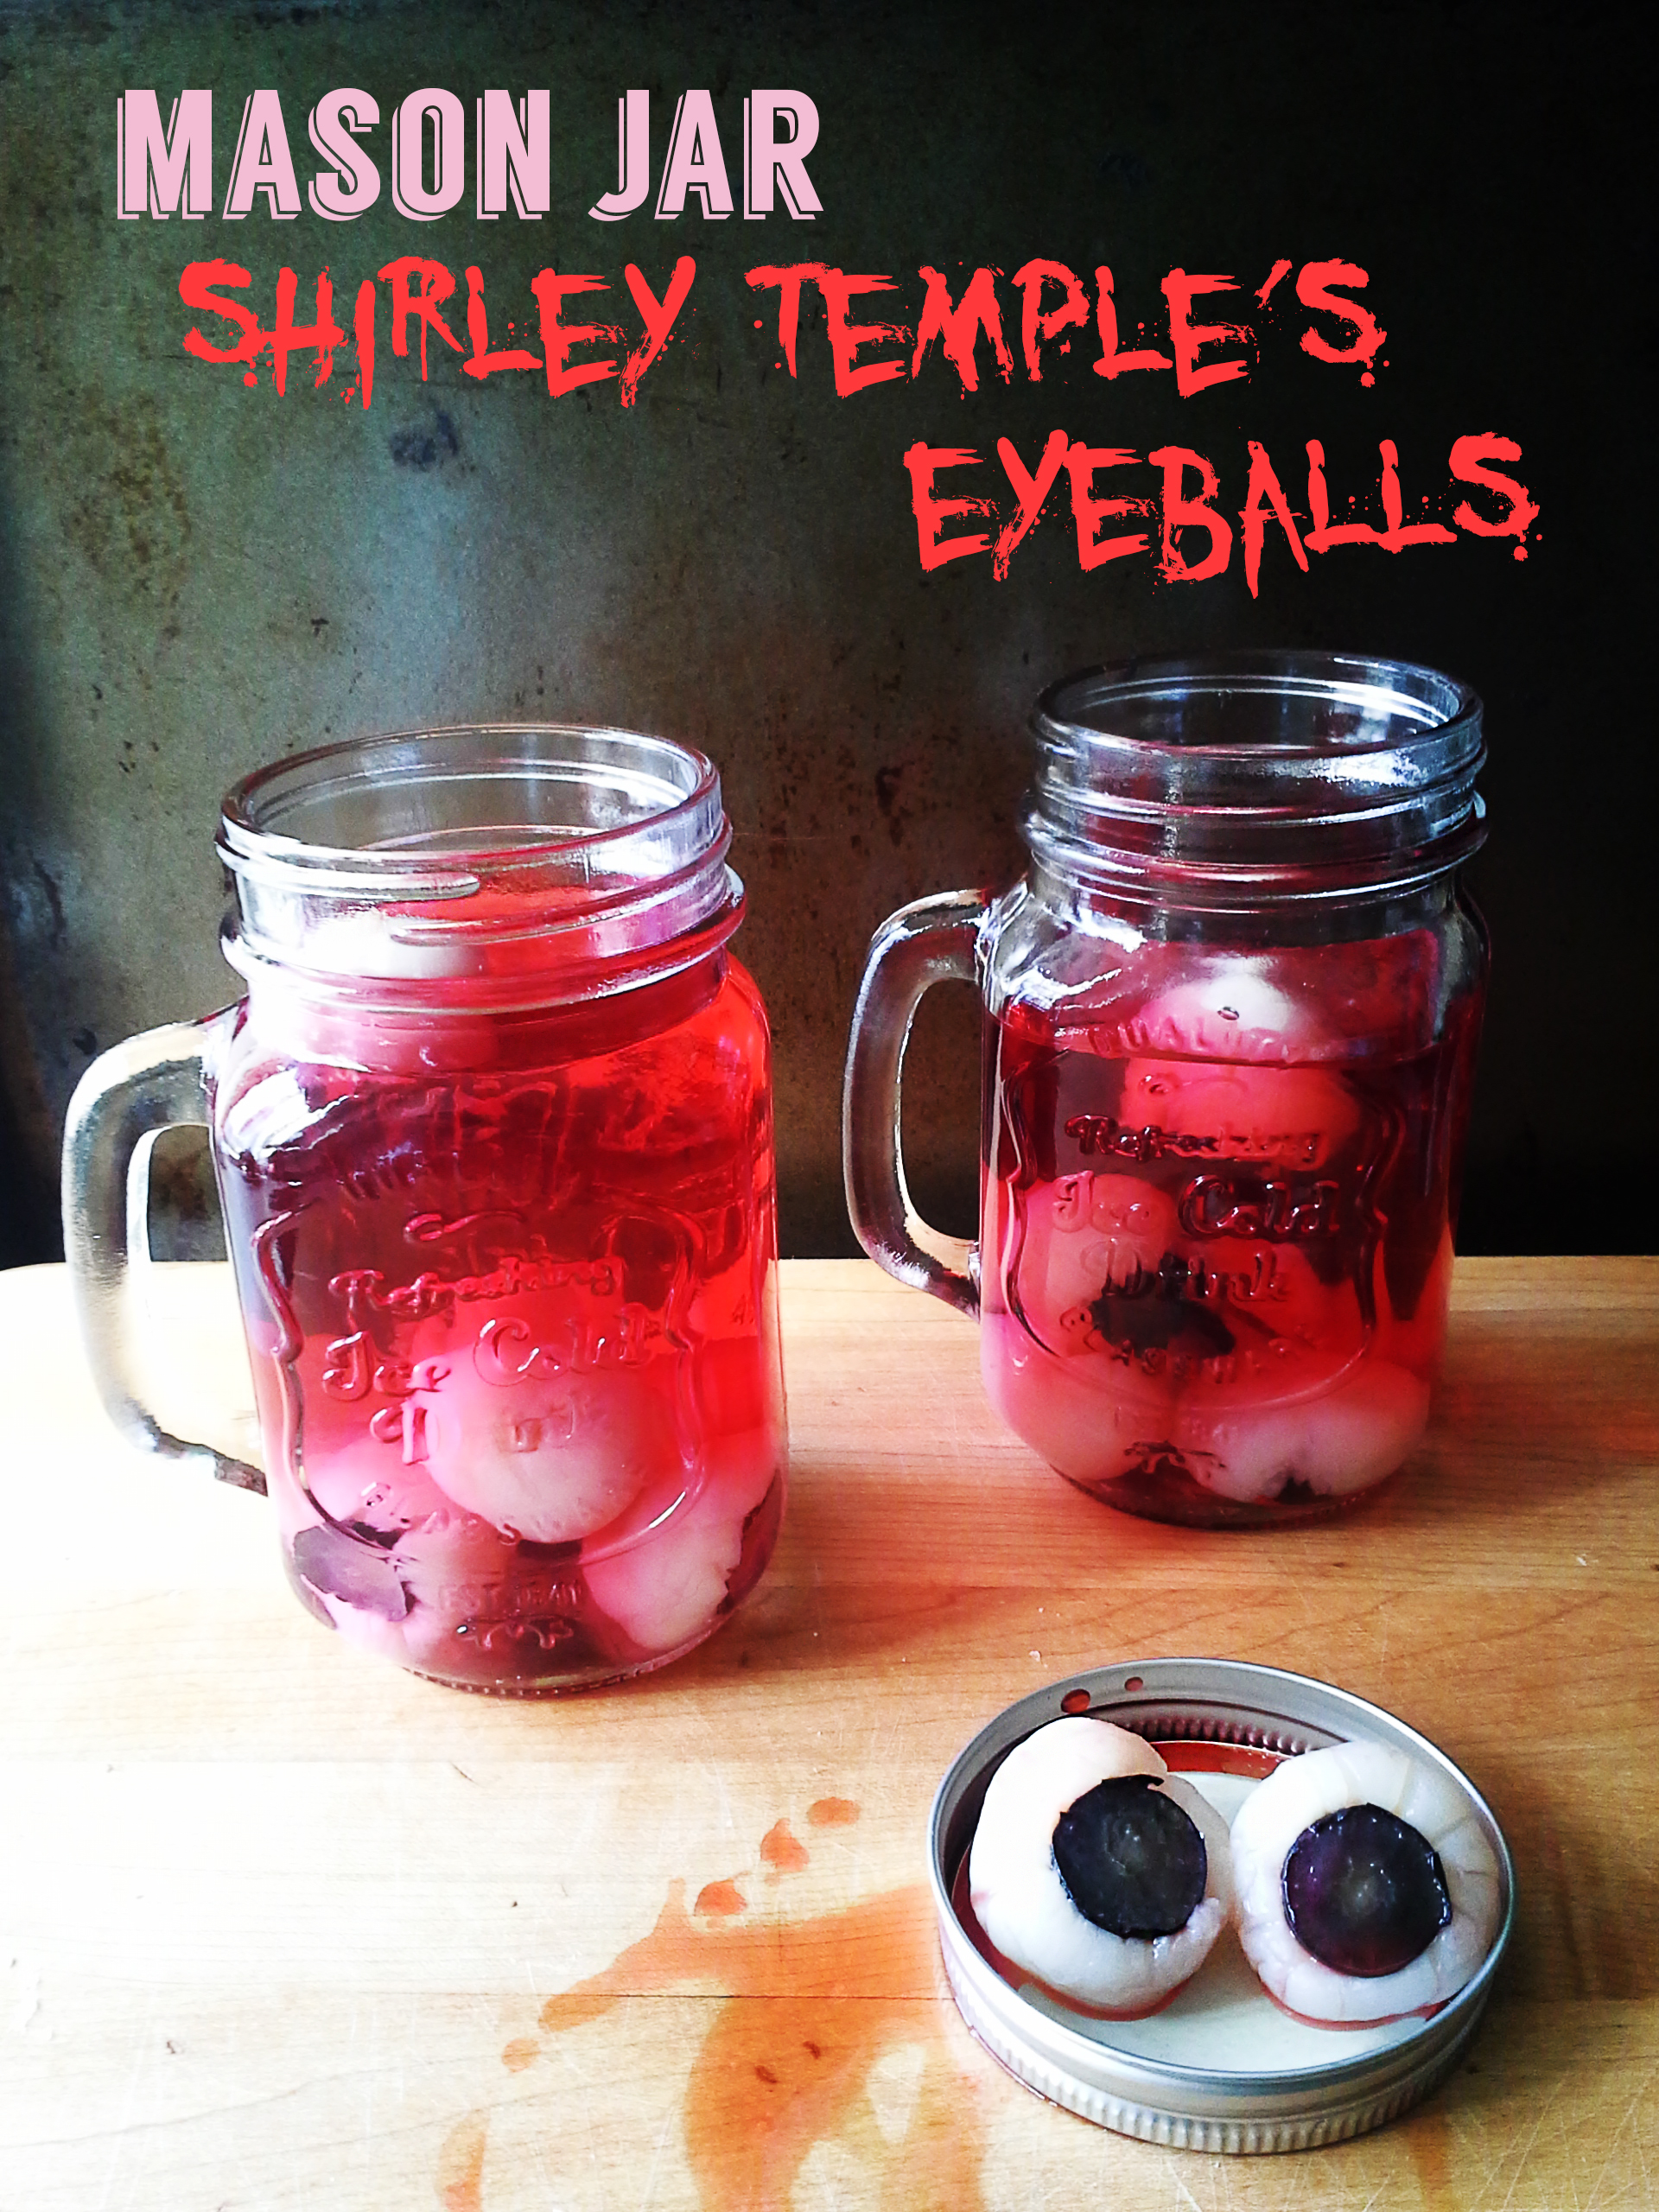 Shirley Temple 39 s Eyeball